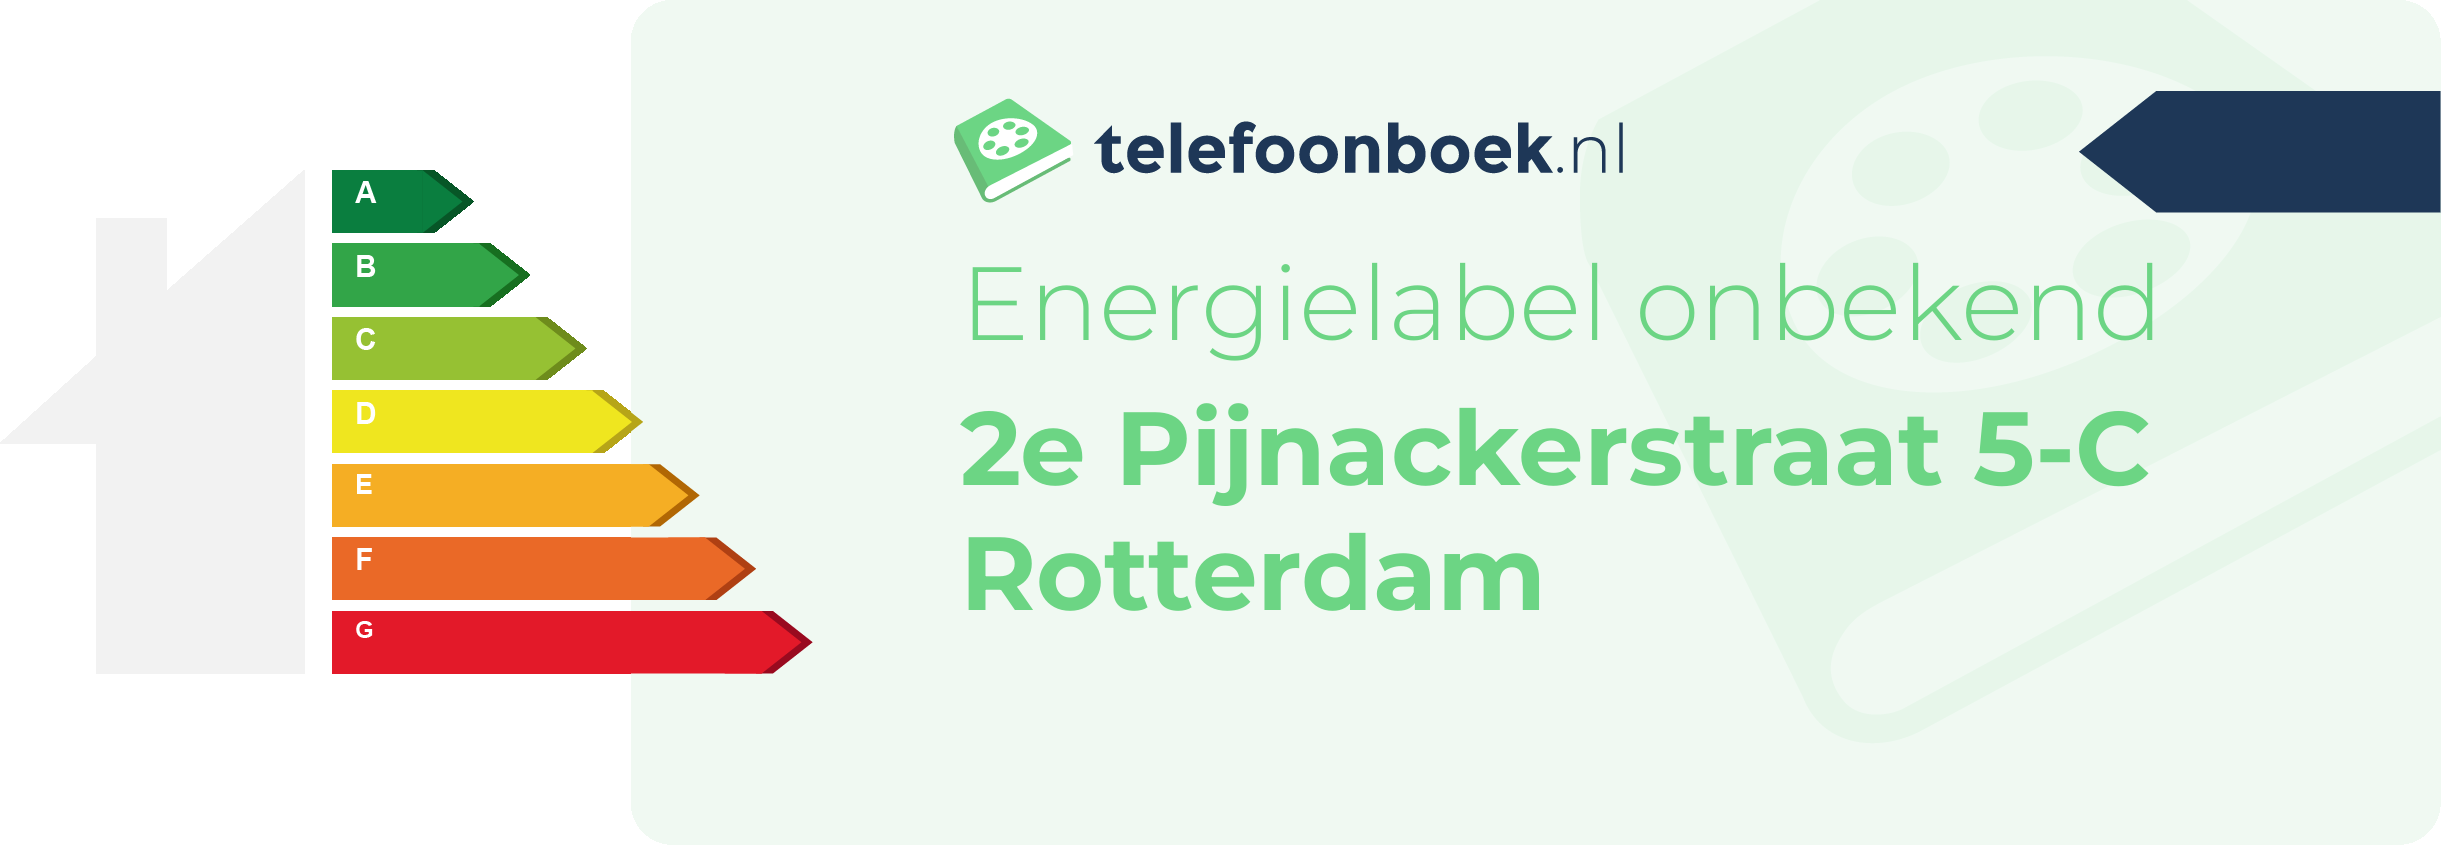 Energielabel 2e Pijnackerstraat 5-C Rotterdam